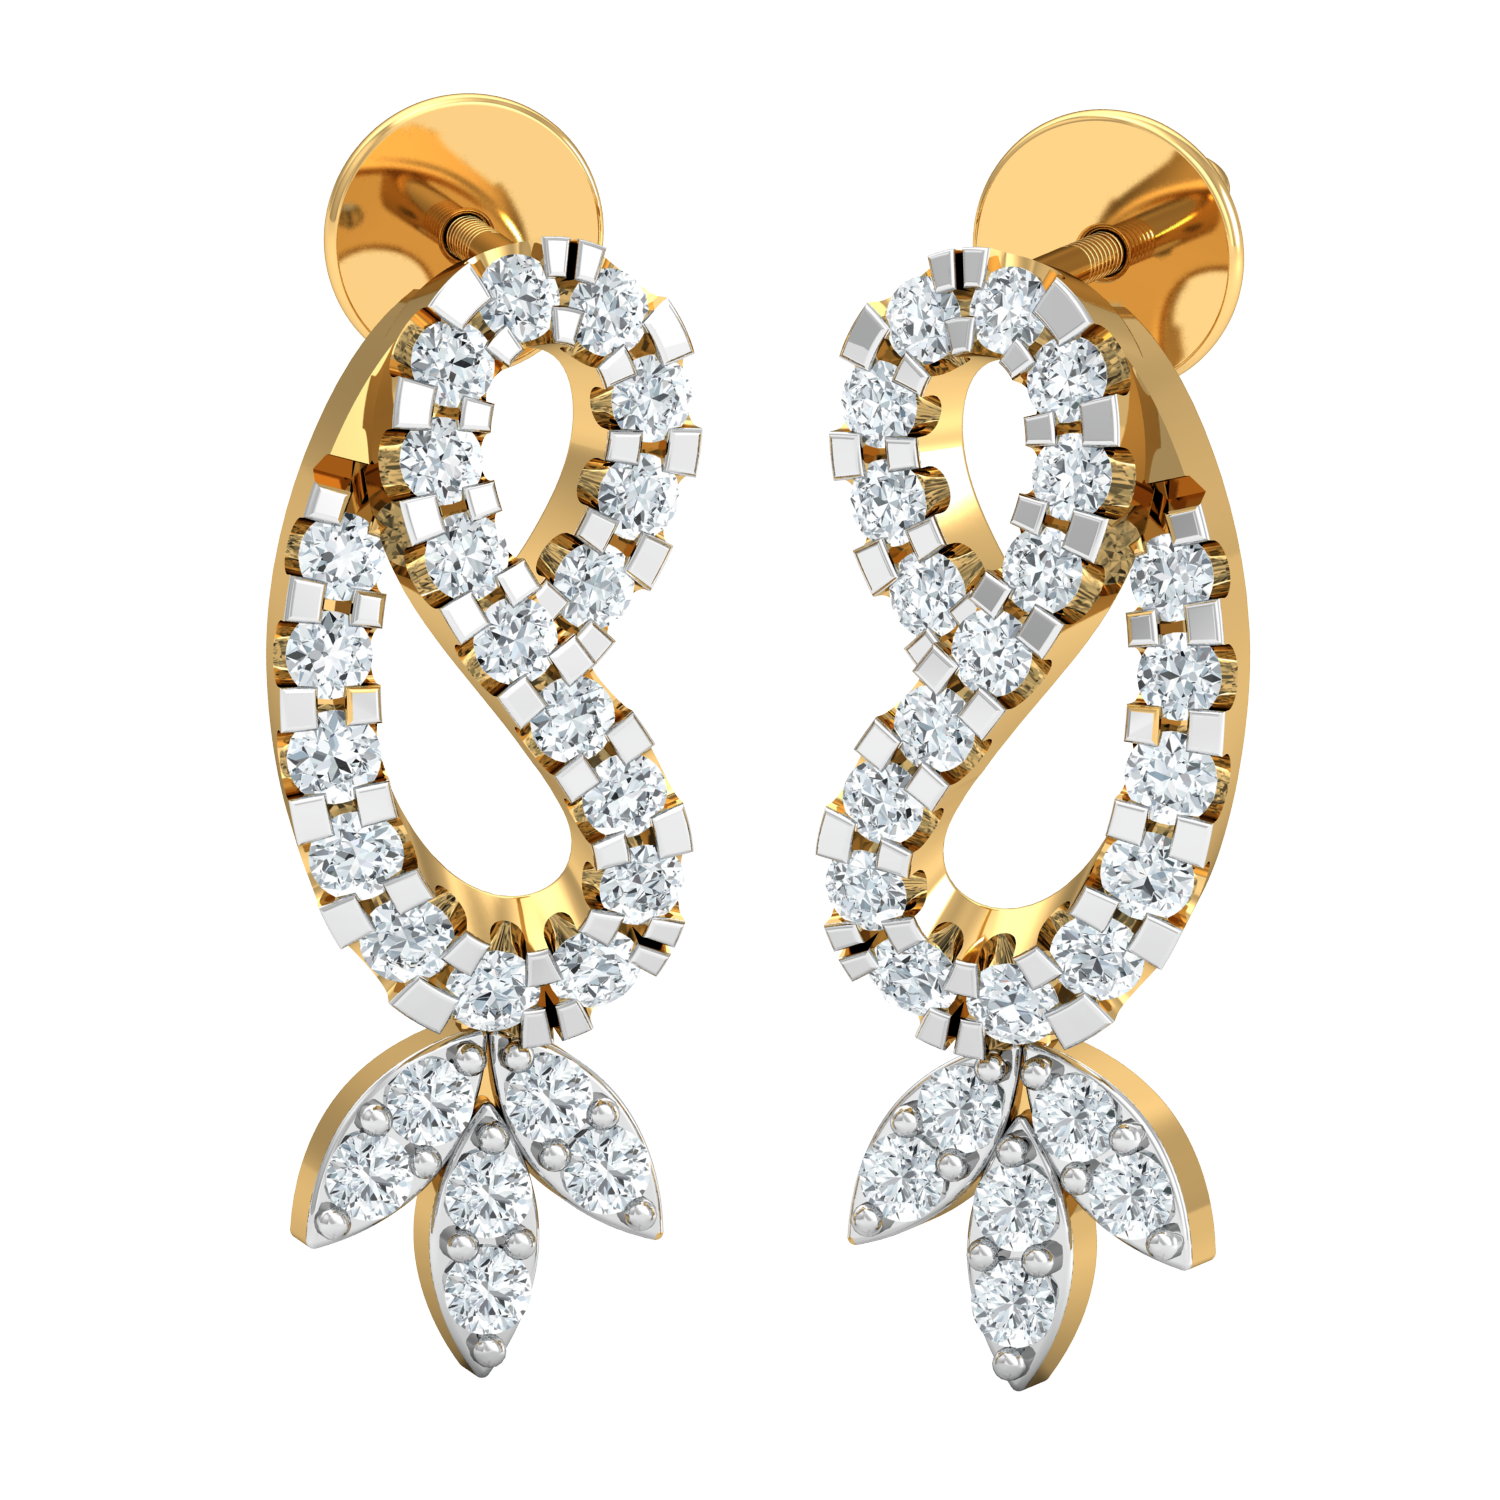 The Kian Diamond Earrings